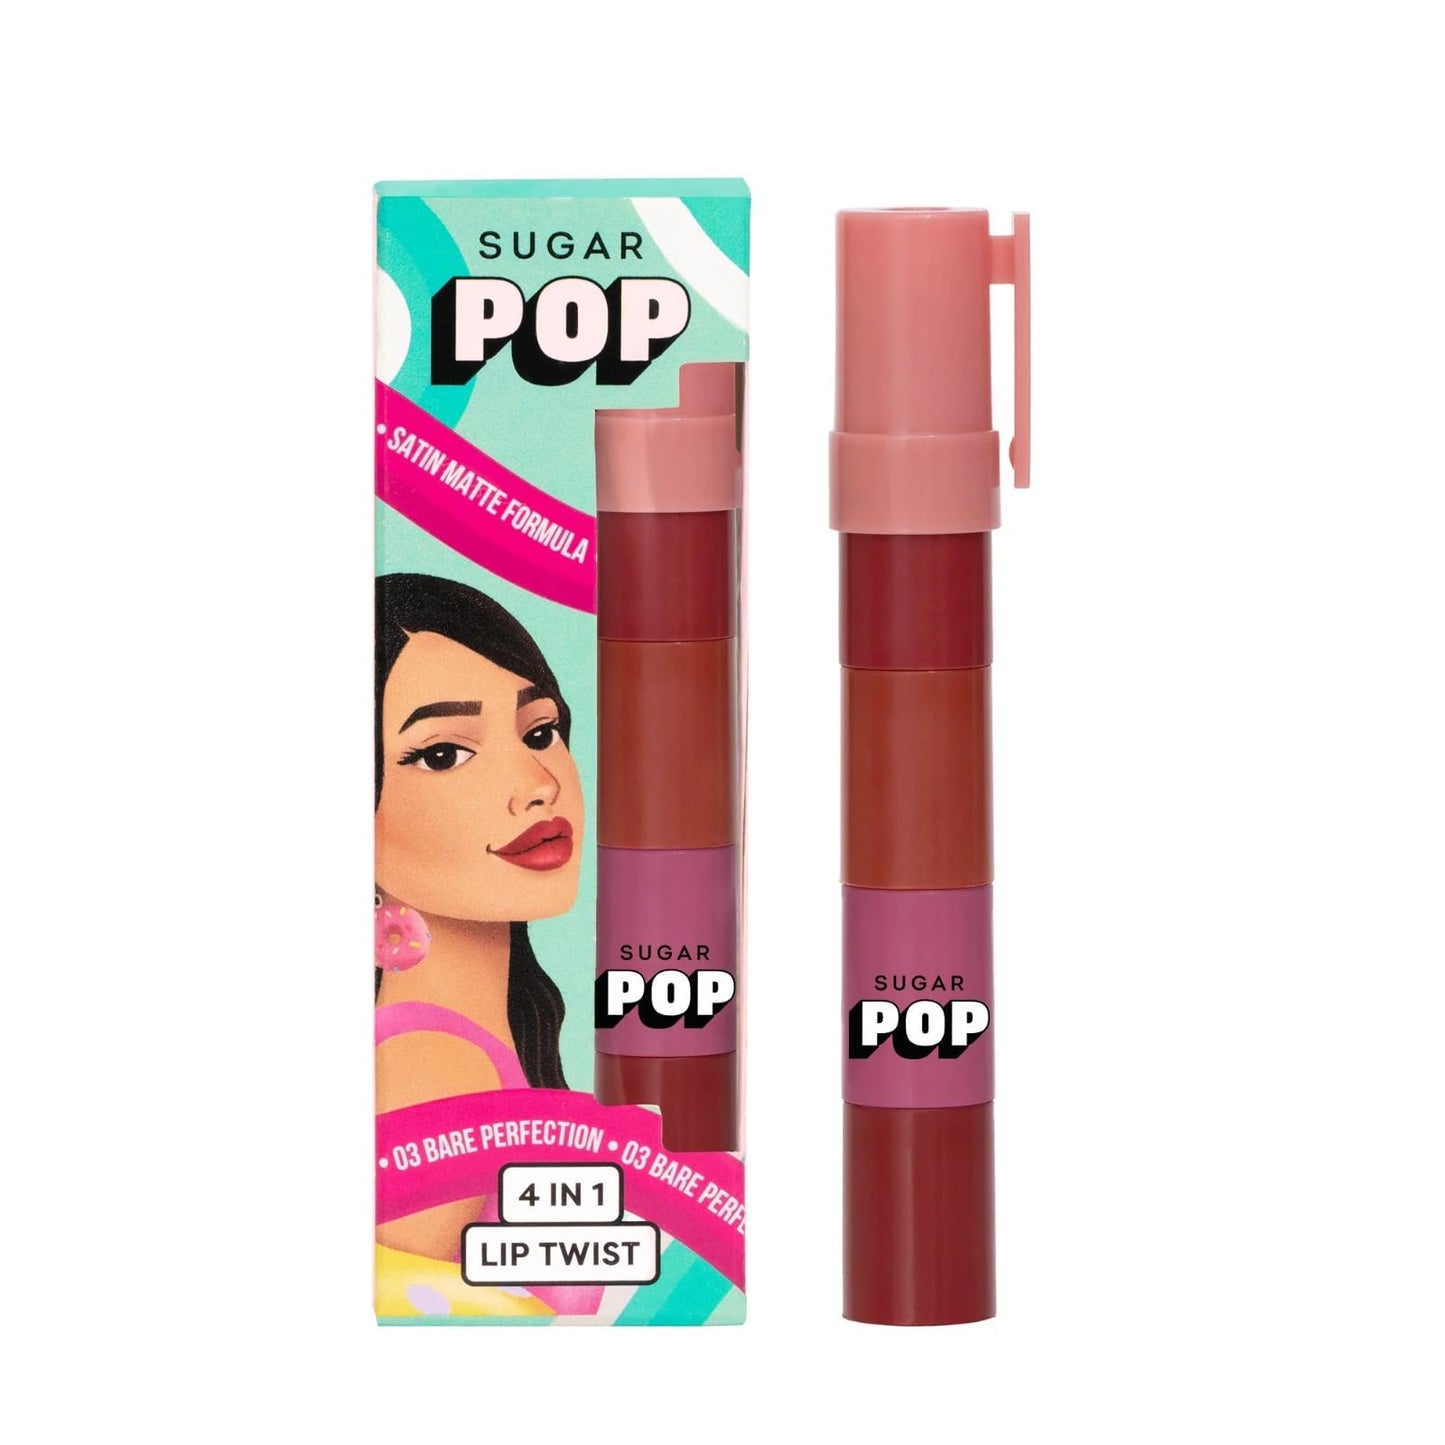 SUGAR POP 4 in 1 Lip Twist Rouge Delight | Multi-use Stackable Lipsticks for Women | Satin Matte Hydrating Formula | 6.4g (SUGAR POP 4 in 1 Lip Twist - 02)